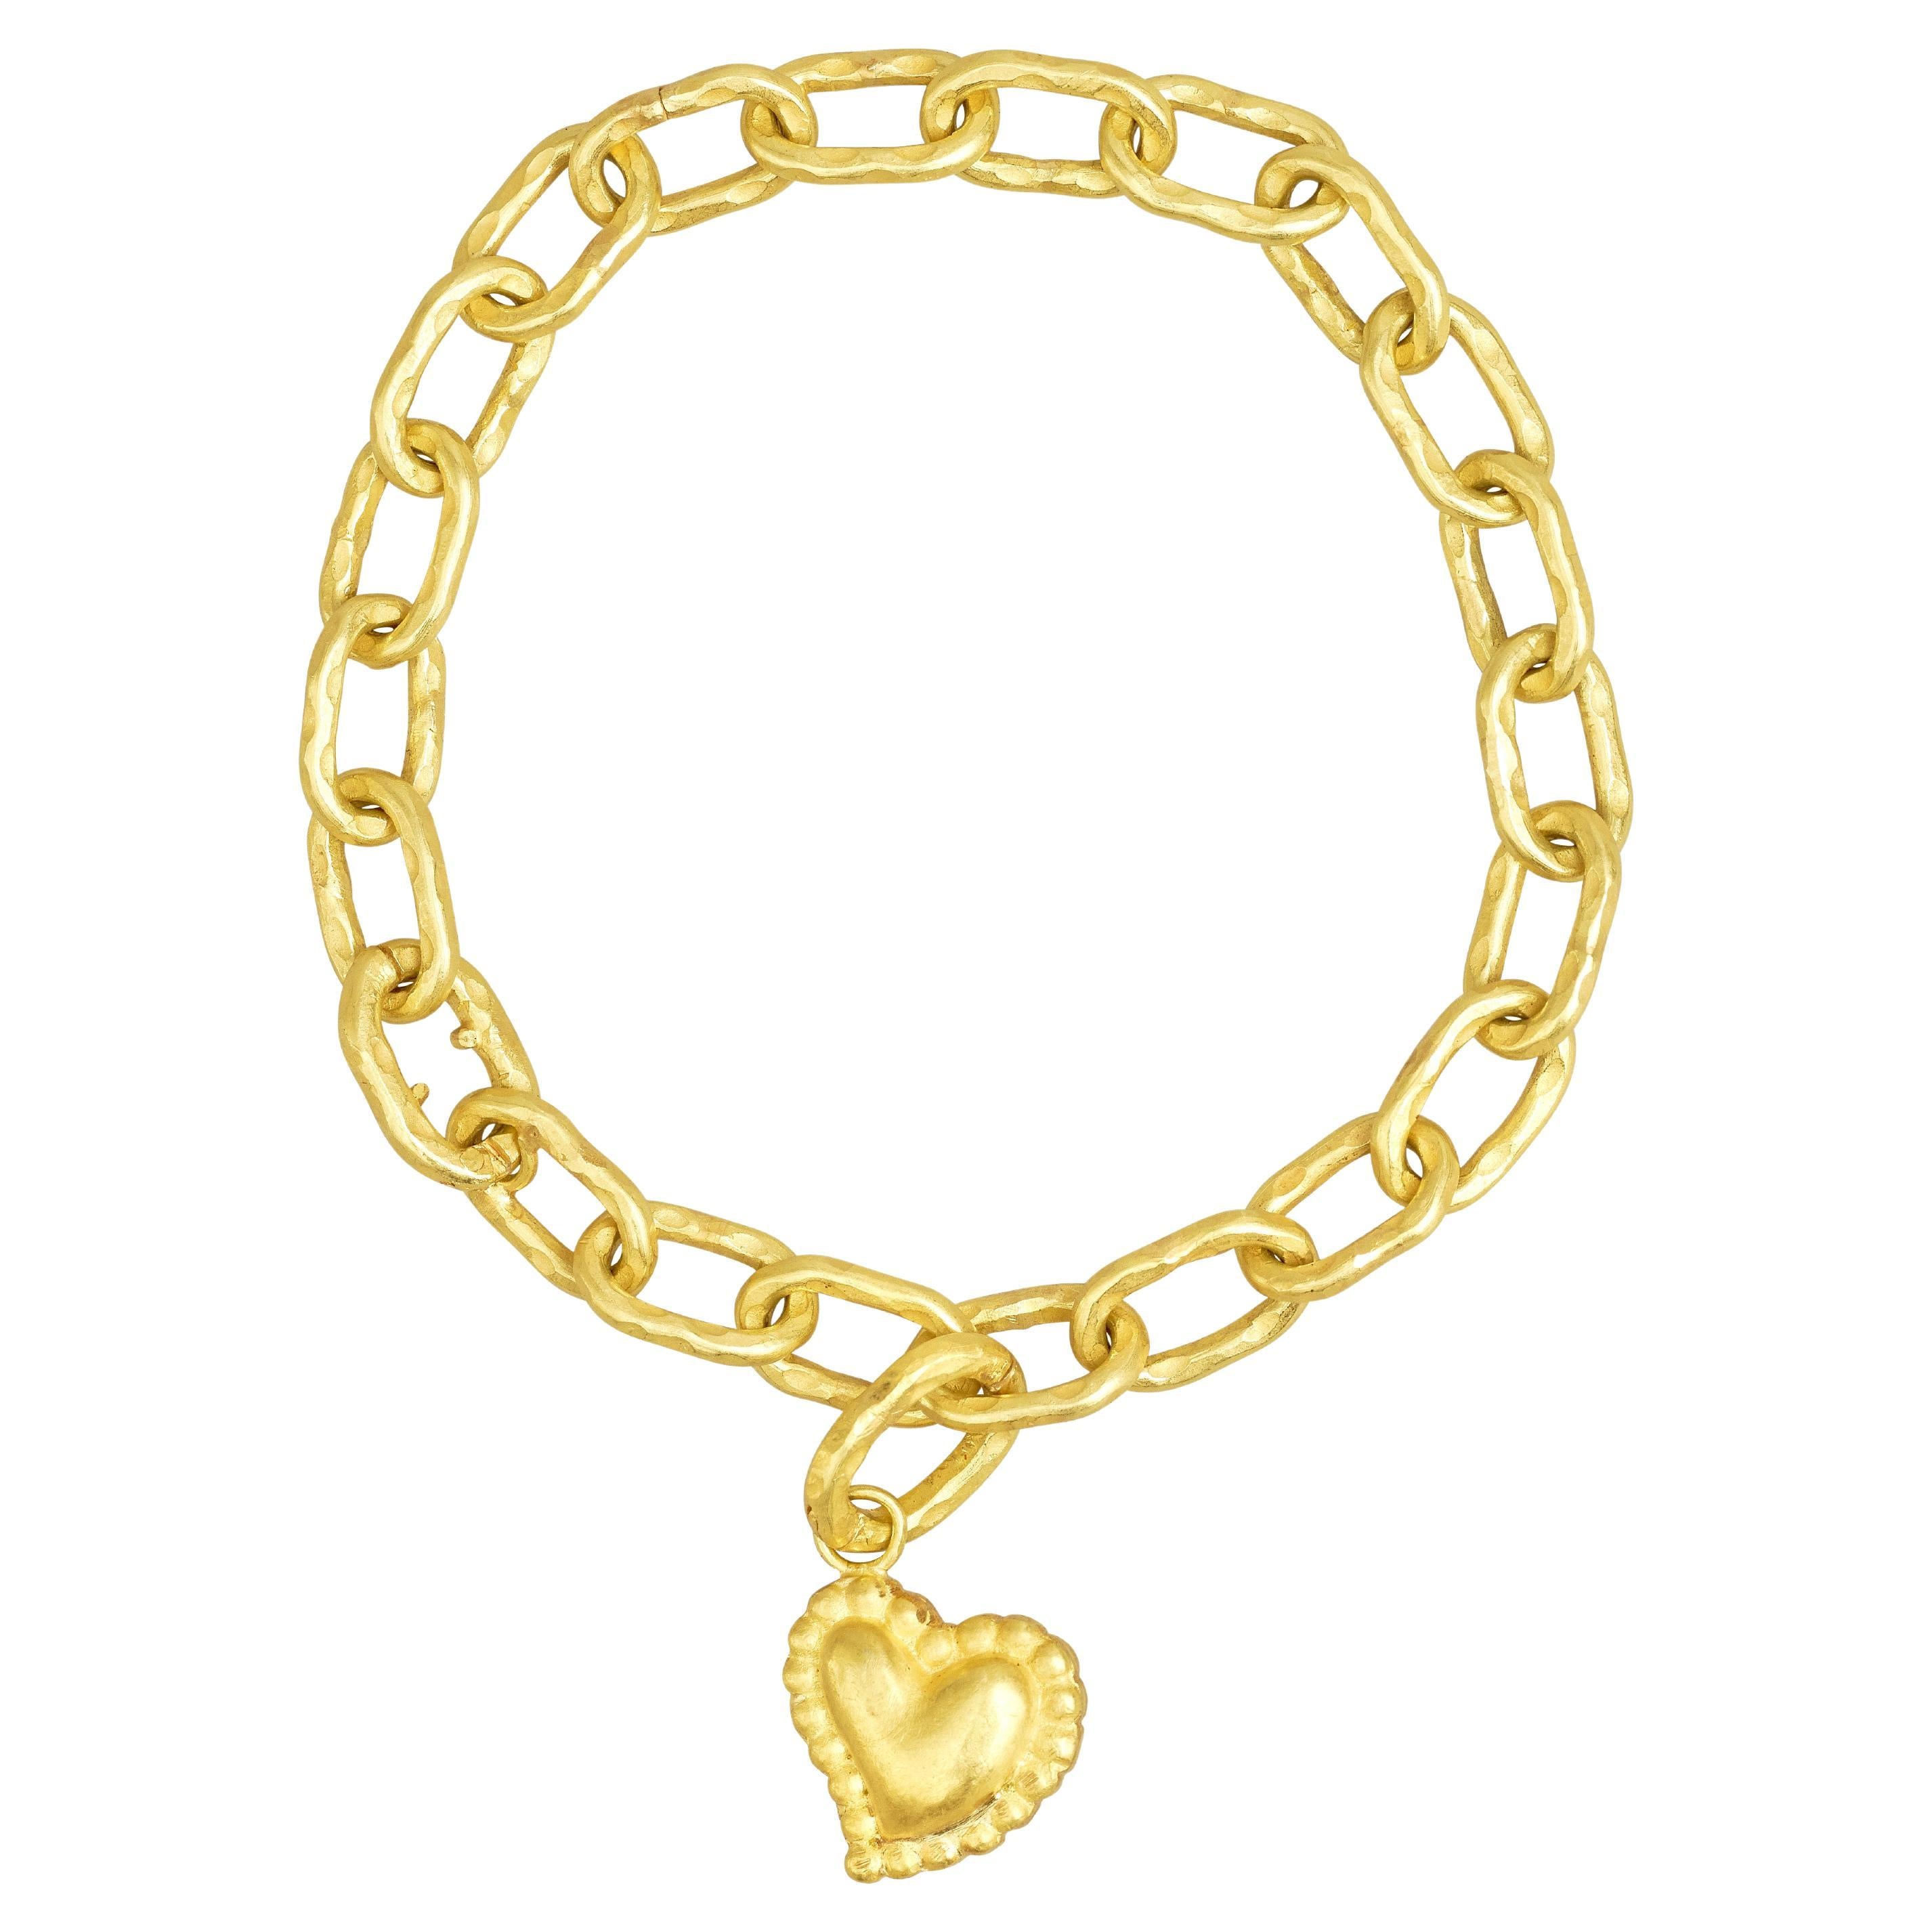 18kt Gold Link Charm Bracelet with Sacred Heart Charm